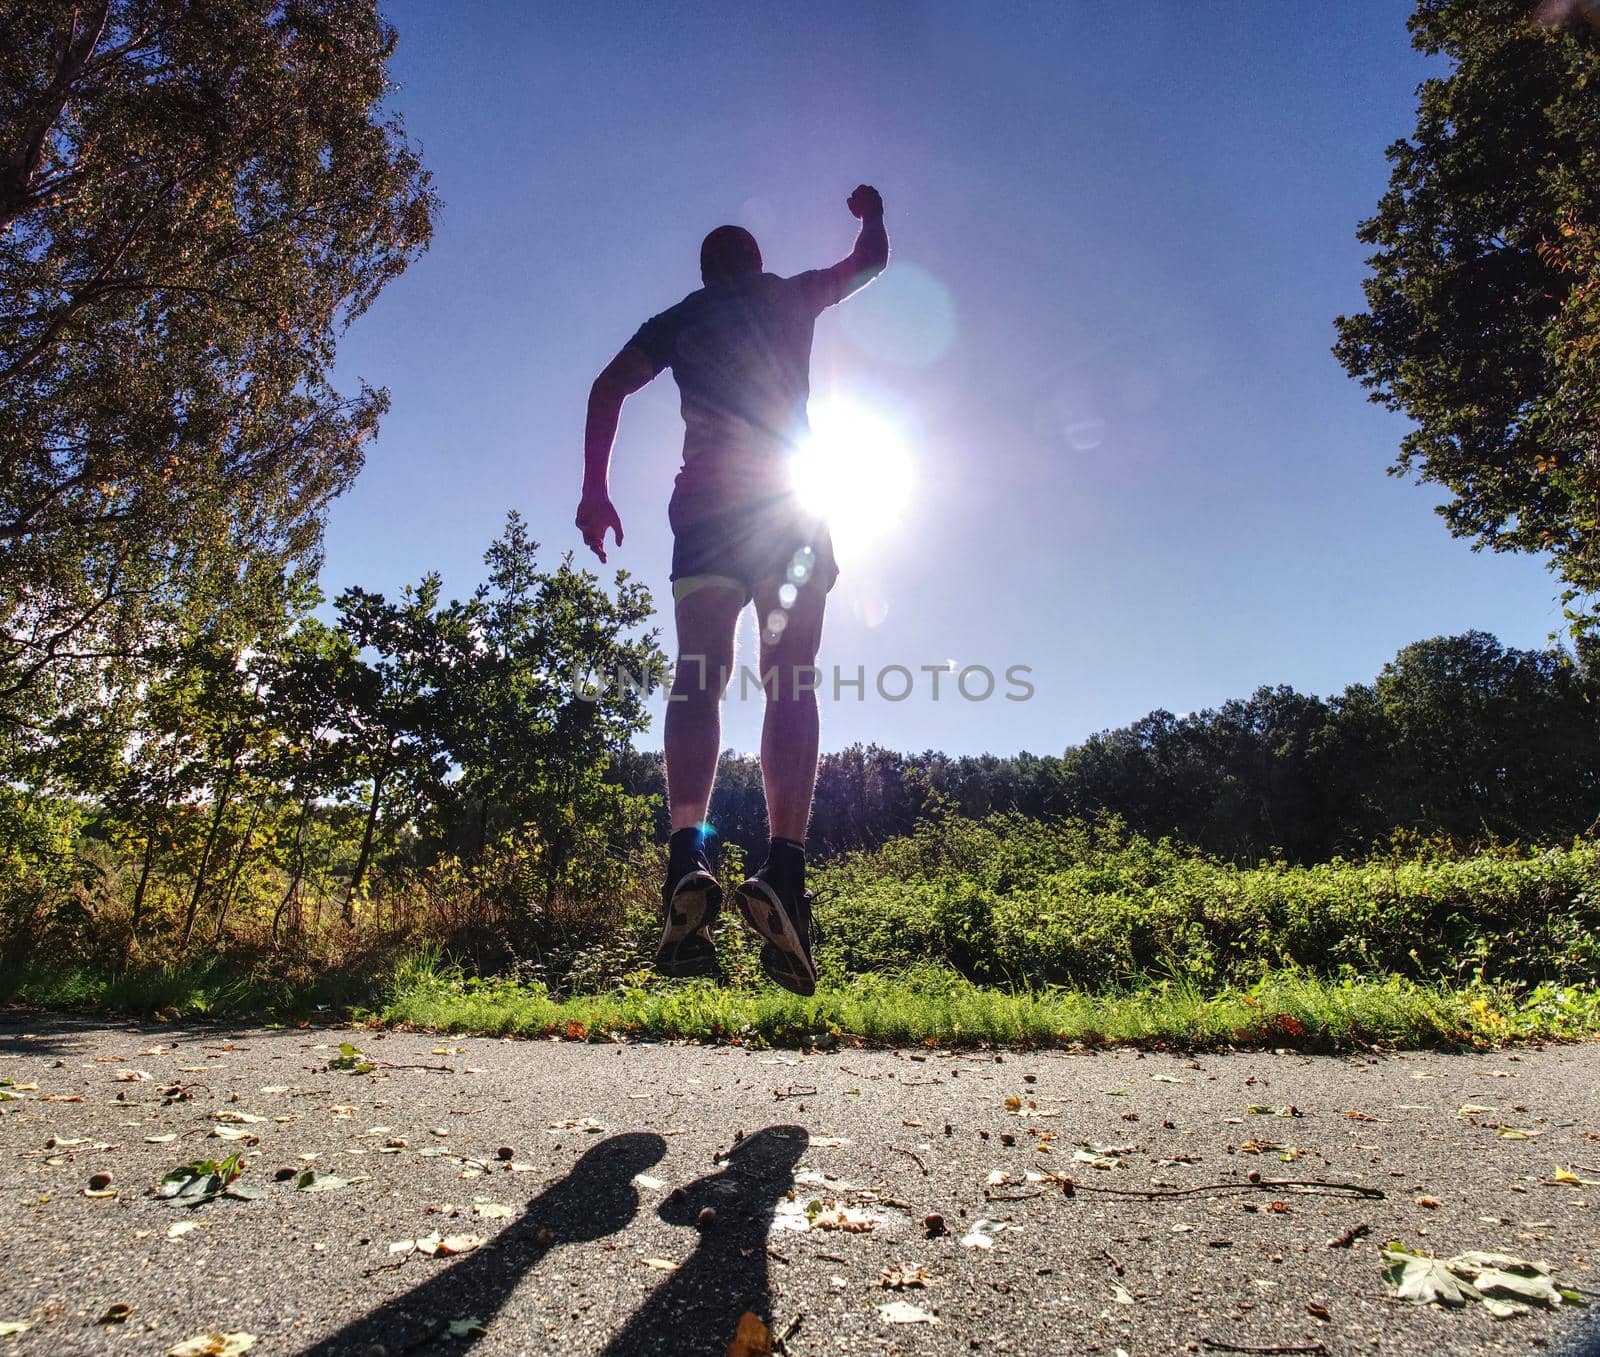 Man jogger run in park sunny day nature background. Man training, prepare his body for marathon